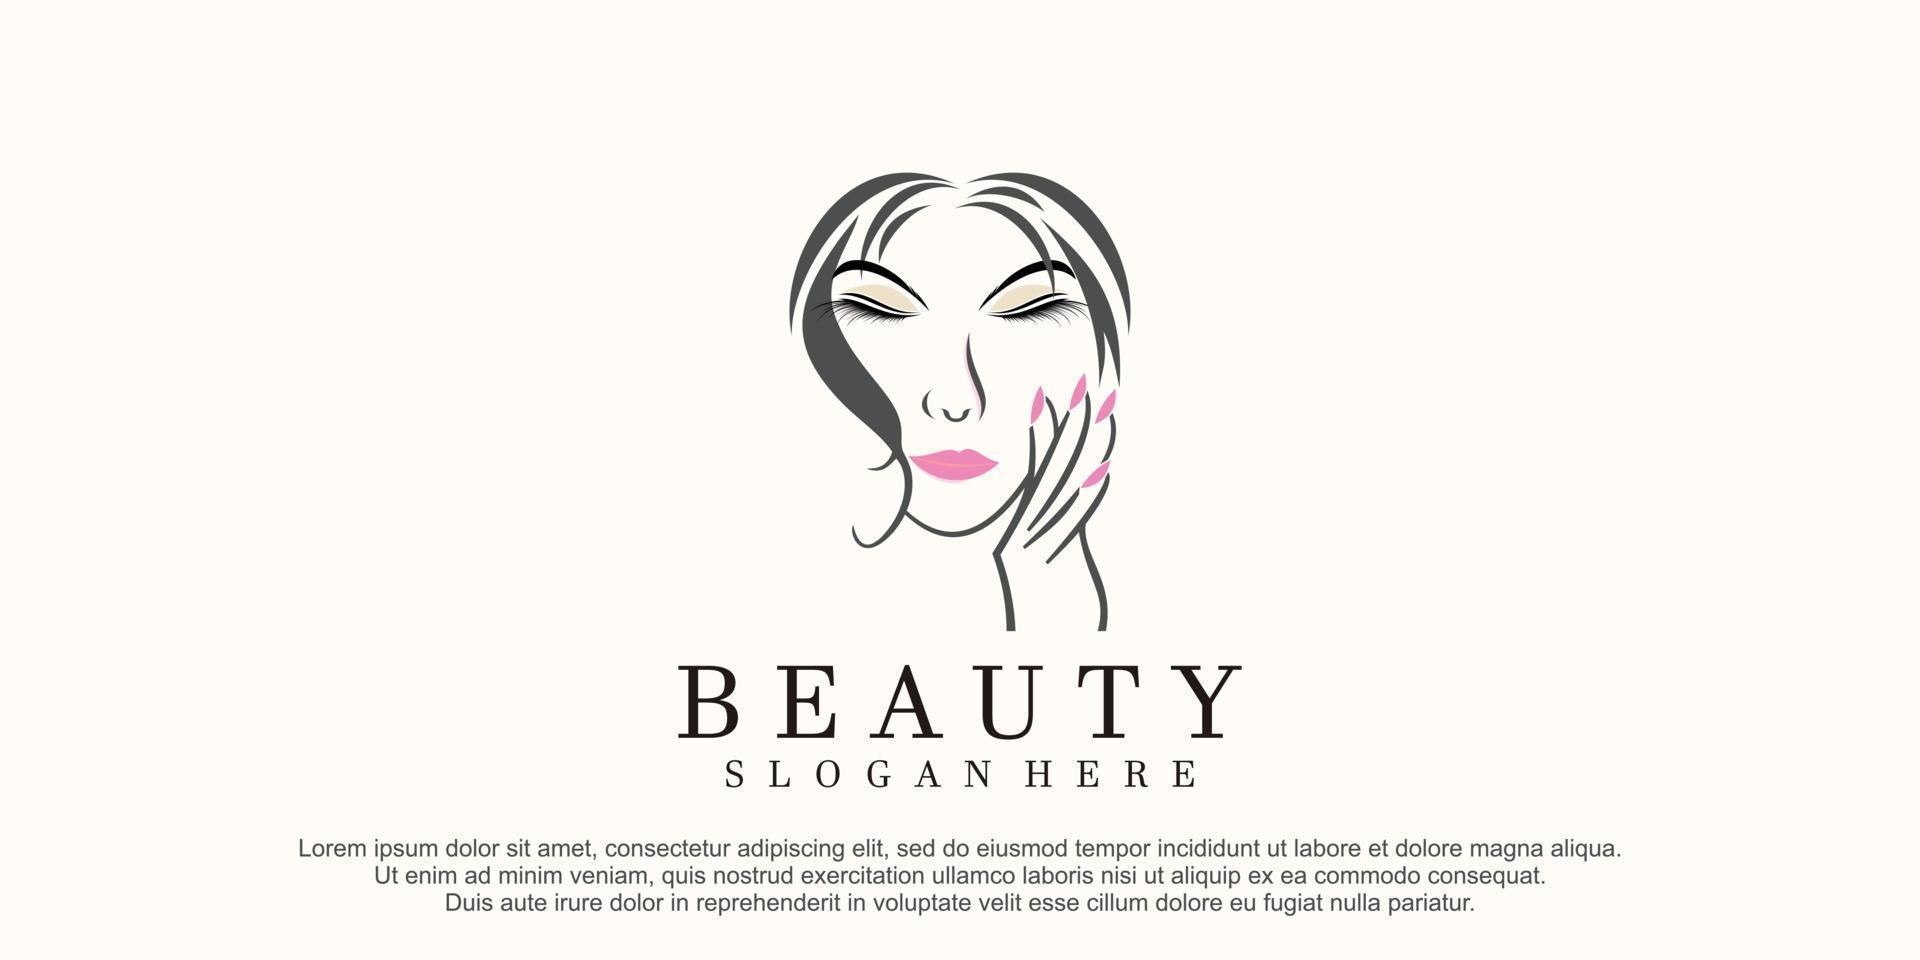 Beauty-Frauen-Salon-Logo und Wimpernverlängerungs-Nagellack-Konzept vektor